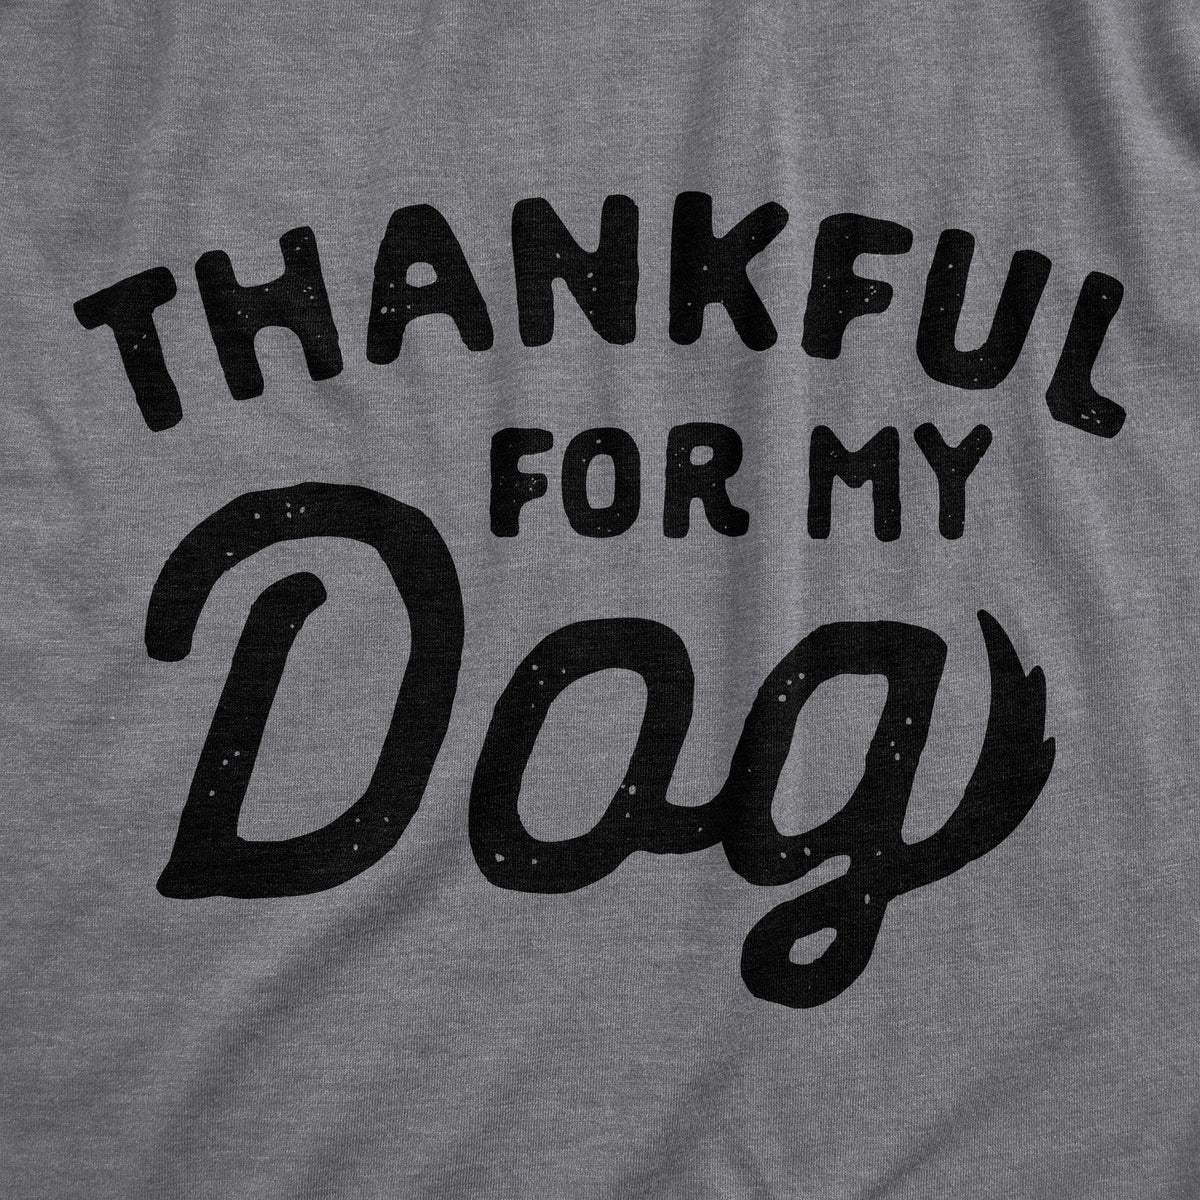 Thankful For My Dog Women&#39;s Tshirt - Crazy Dog T-Shirts